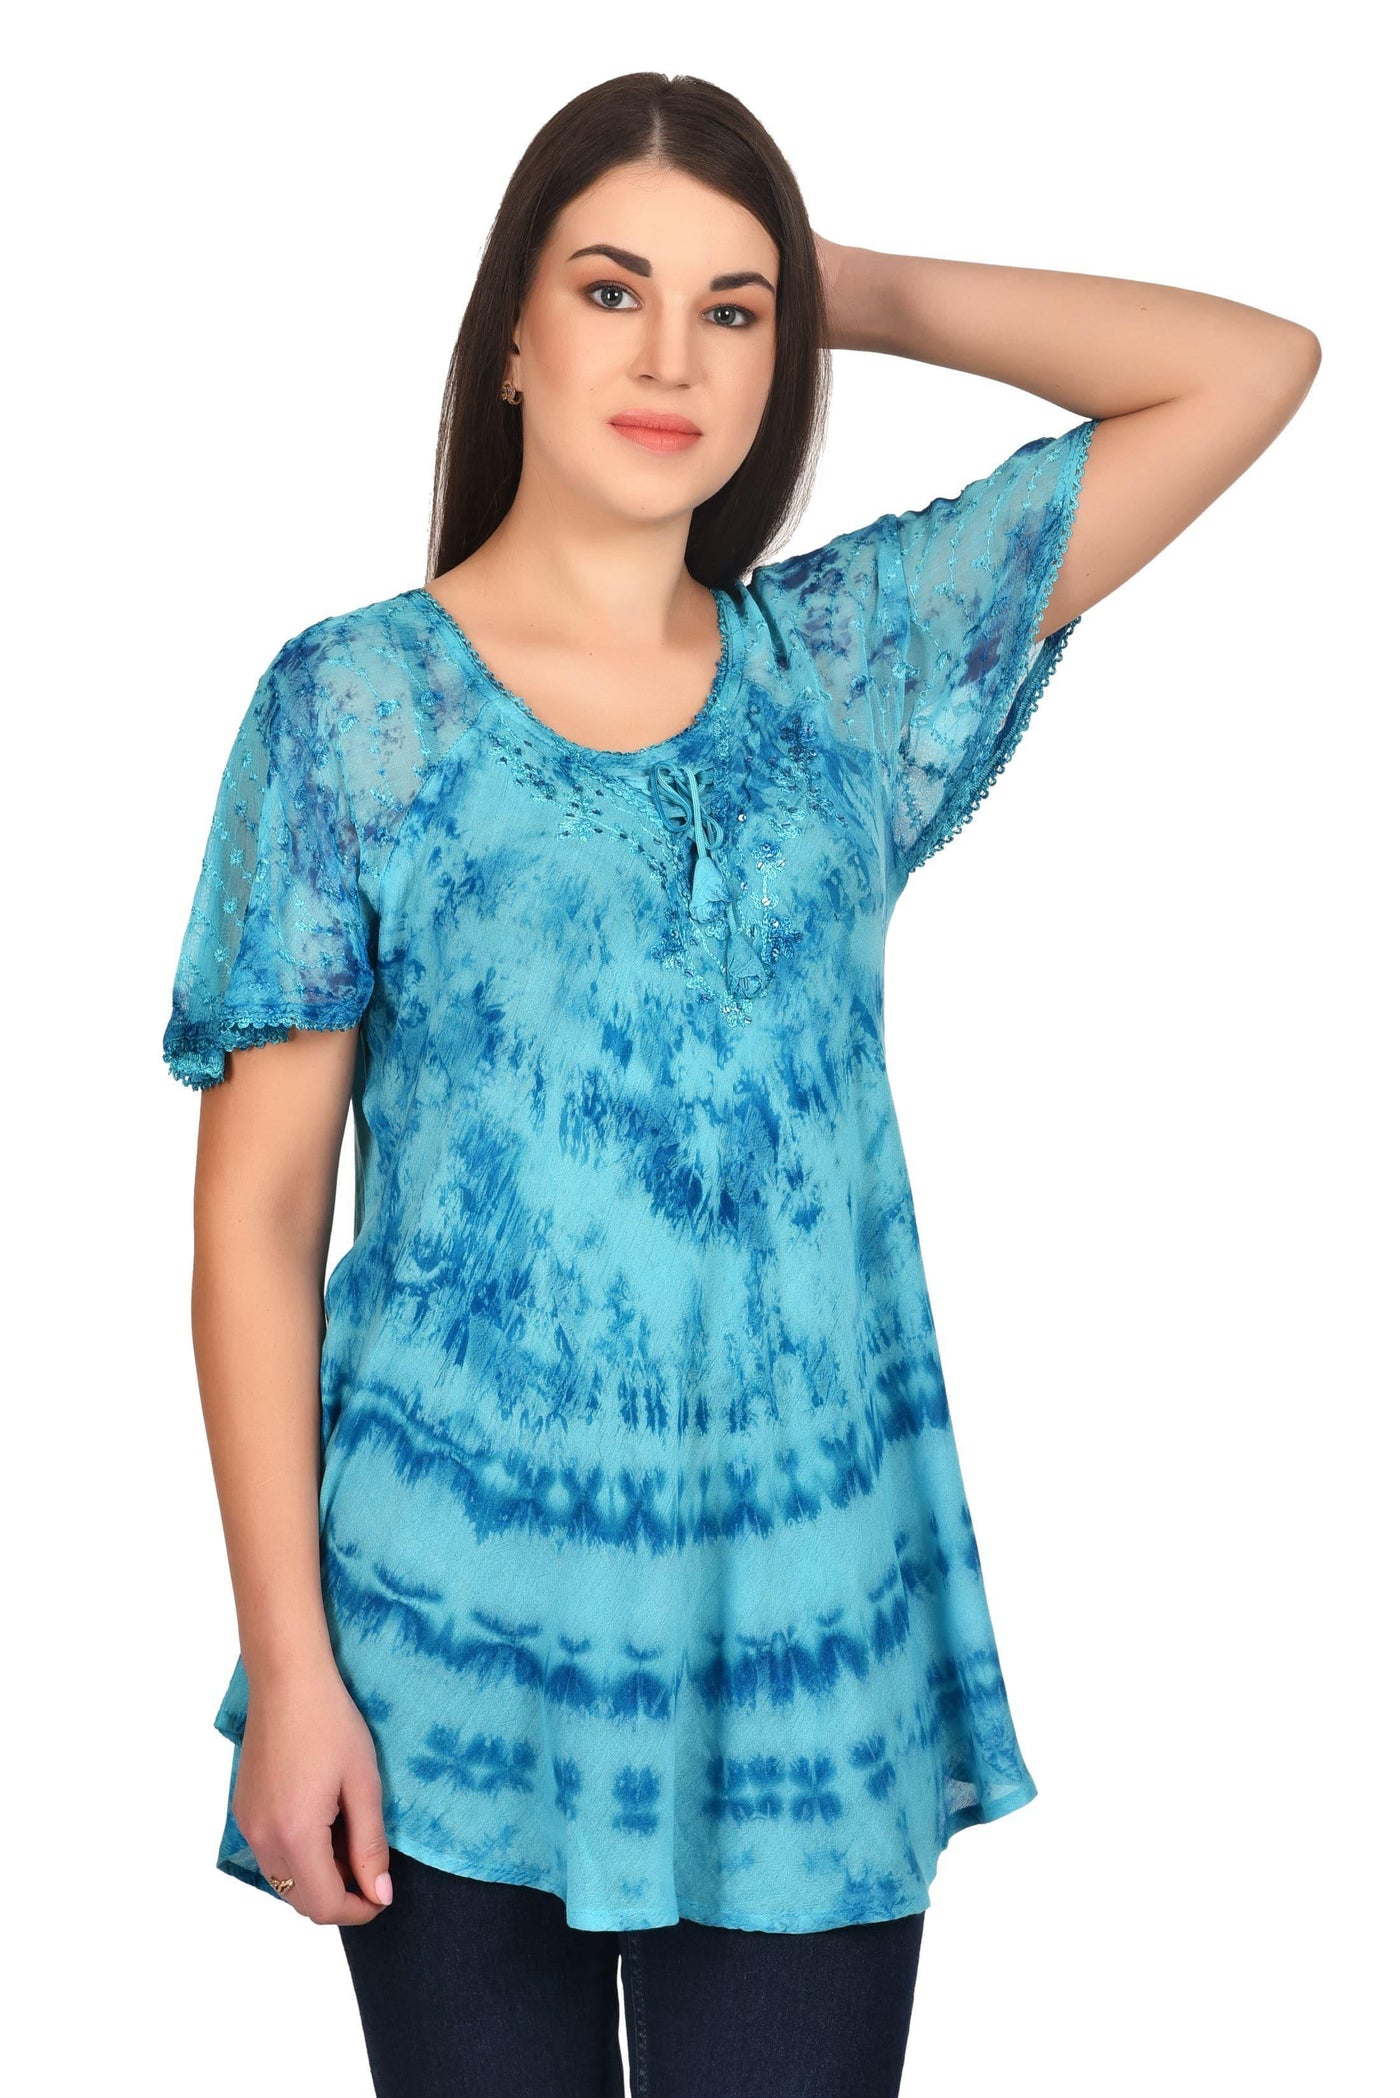 Kauai Tie Dye Cap Sleeve Blouse 19212 - Advance Apparels Inc